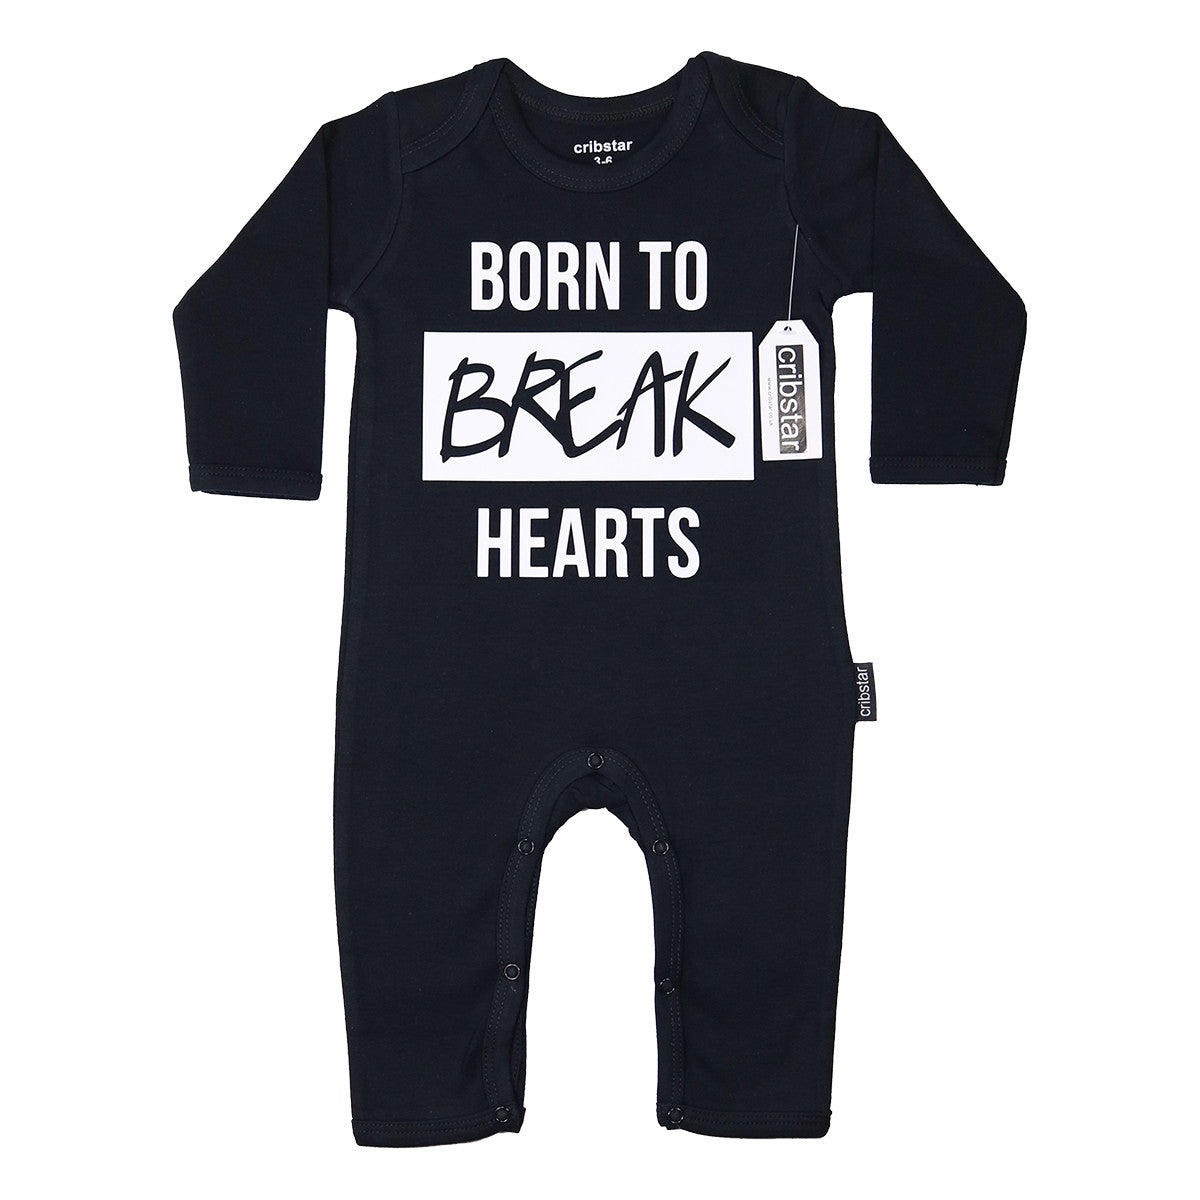 Born to Break Hearts Baby Romper